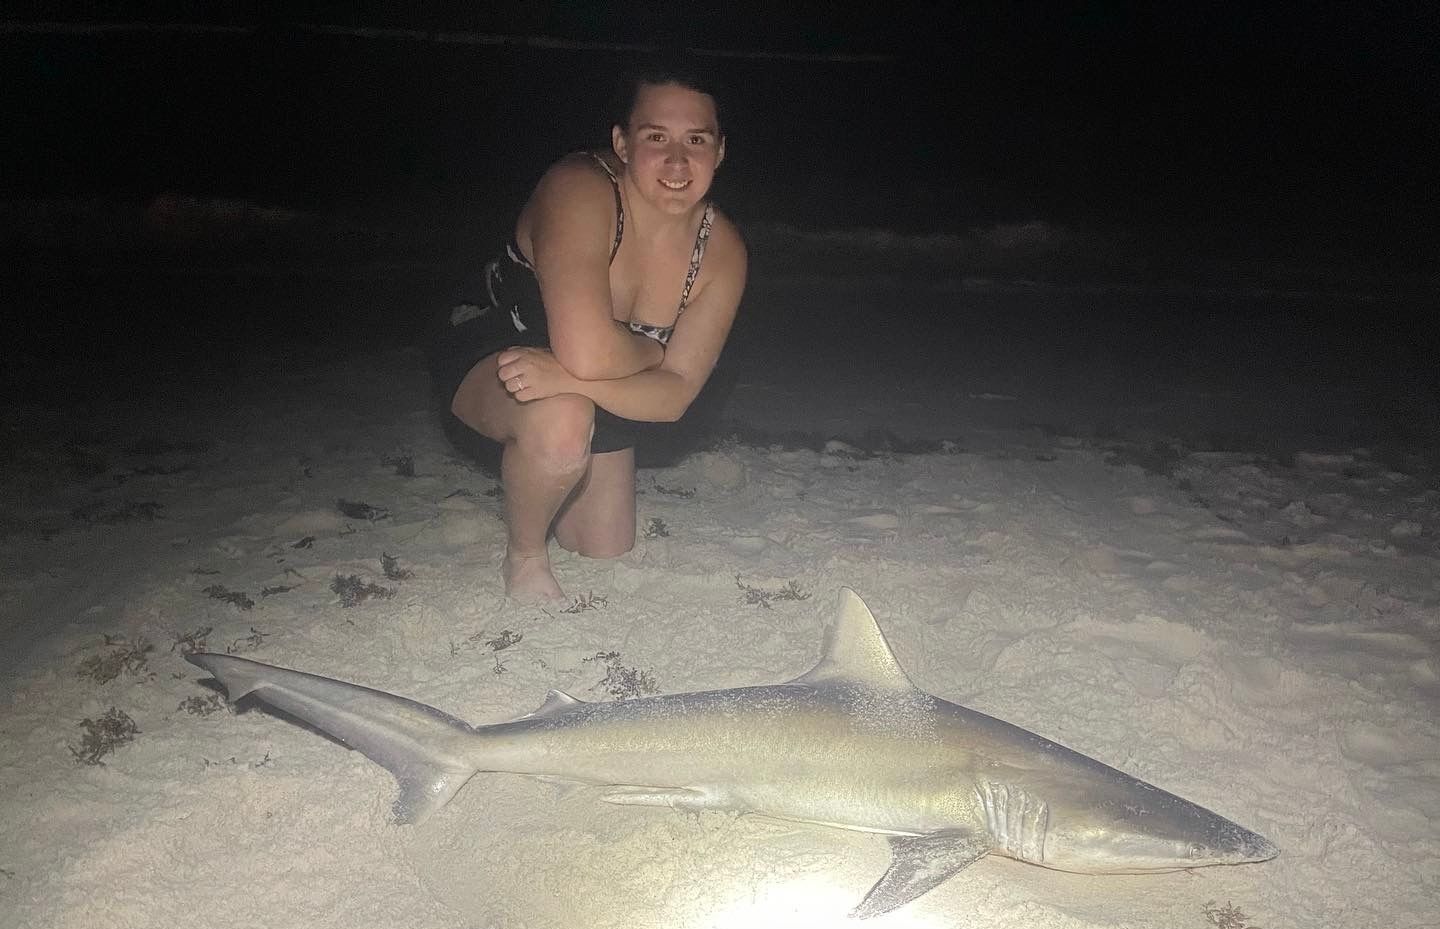 Southern Roots Alabama Florida Shark Fishing Trips | 8 Hour Charter Trip fishing BackCountry